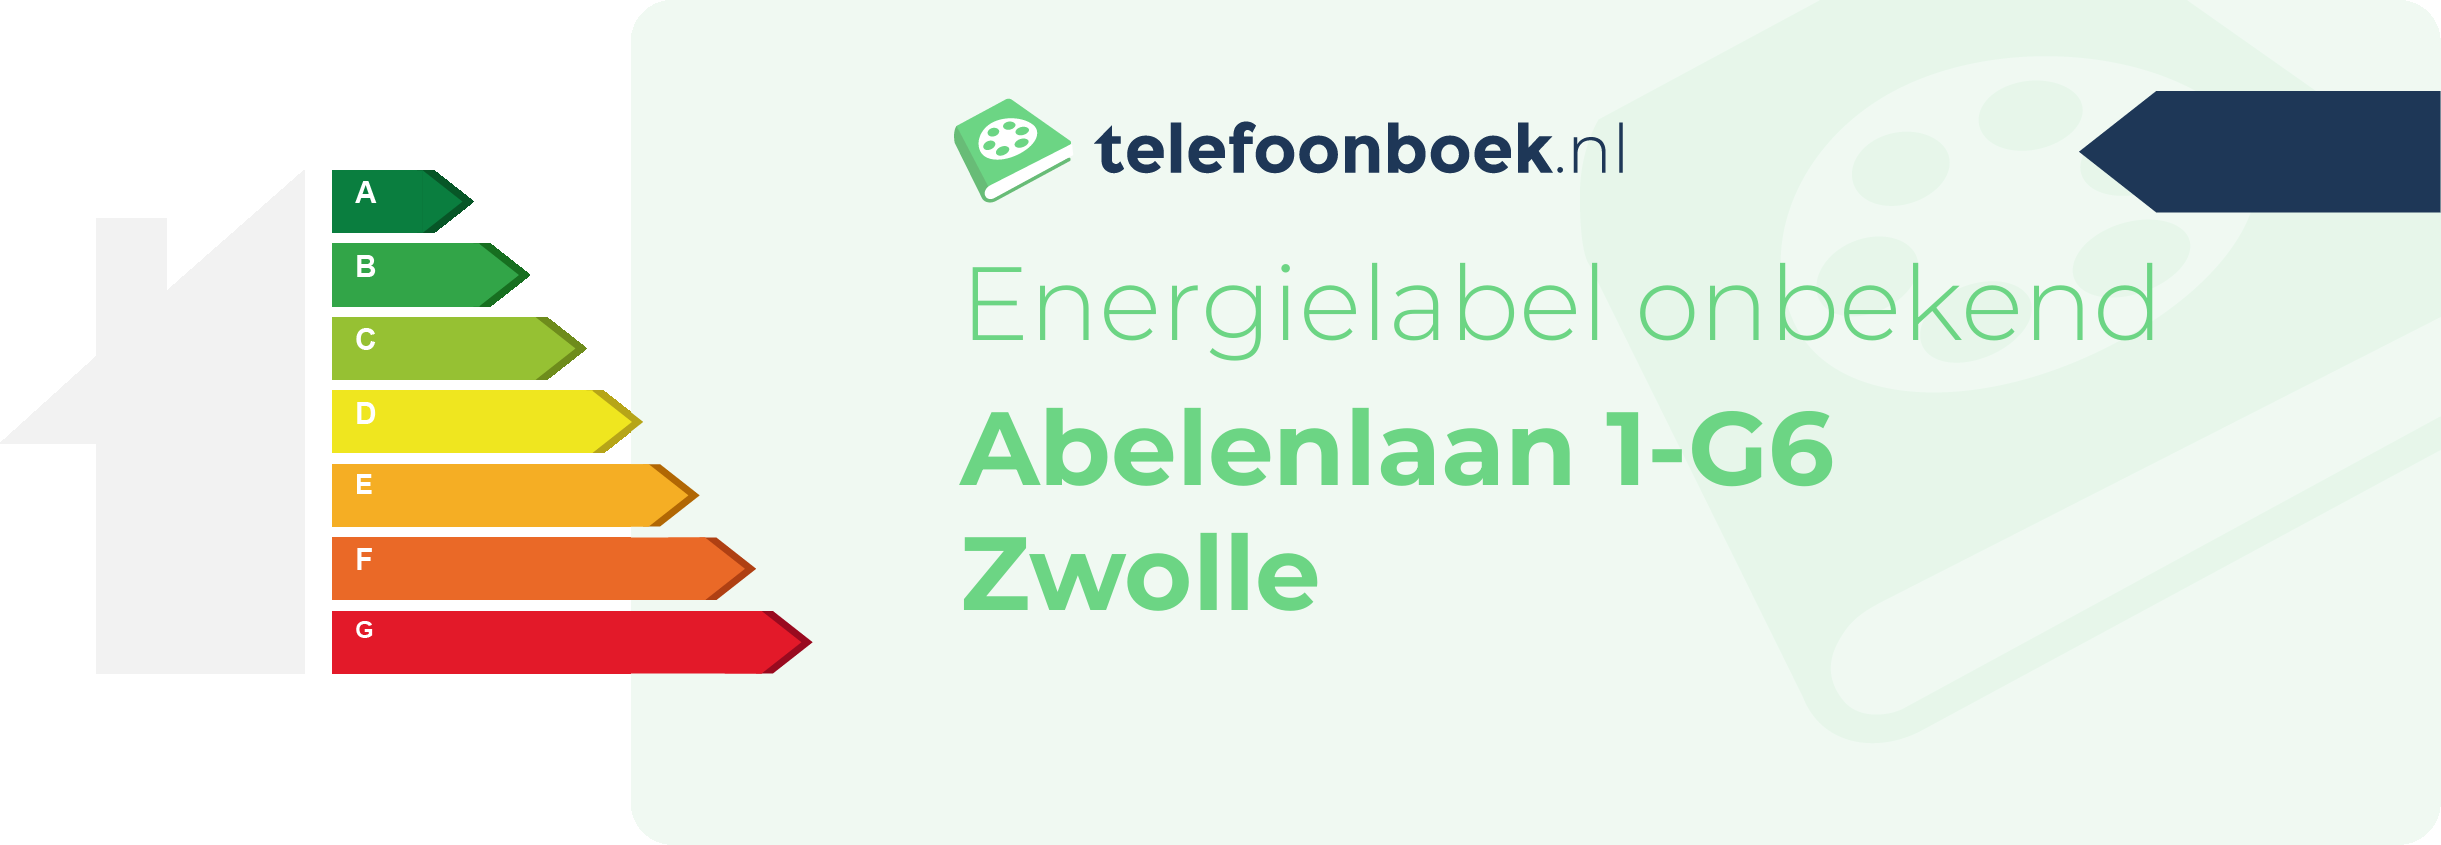 Energielabel Abelenlaan 1-G6 Zwolle